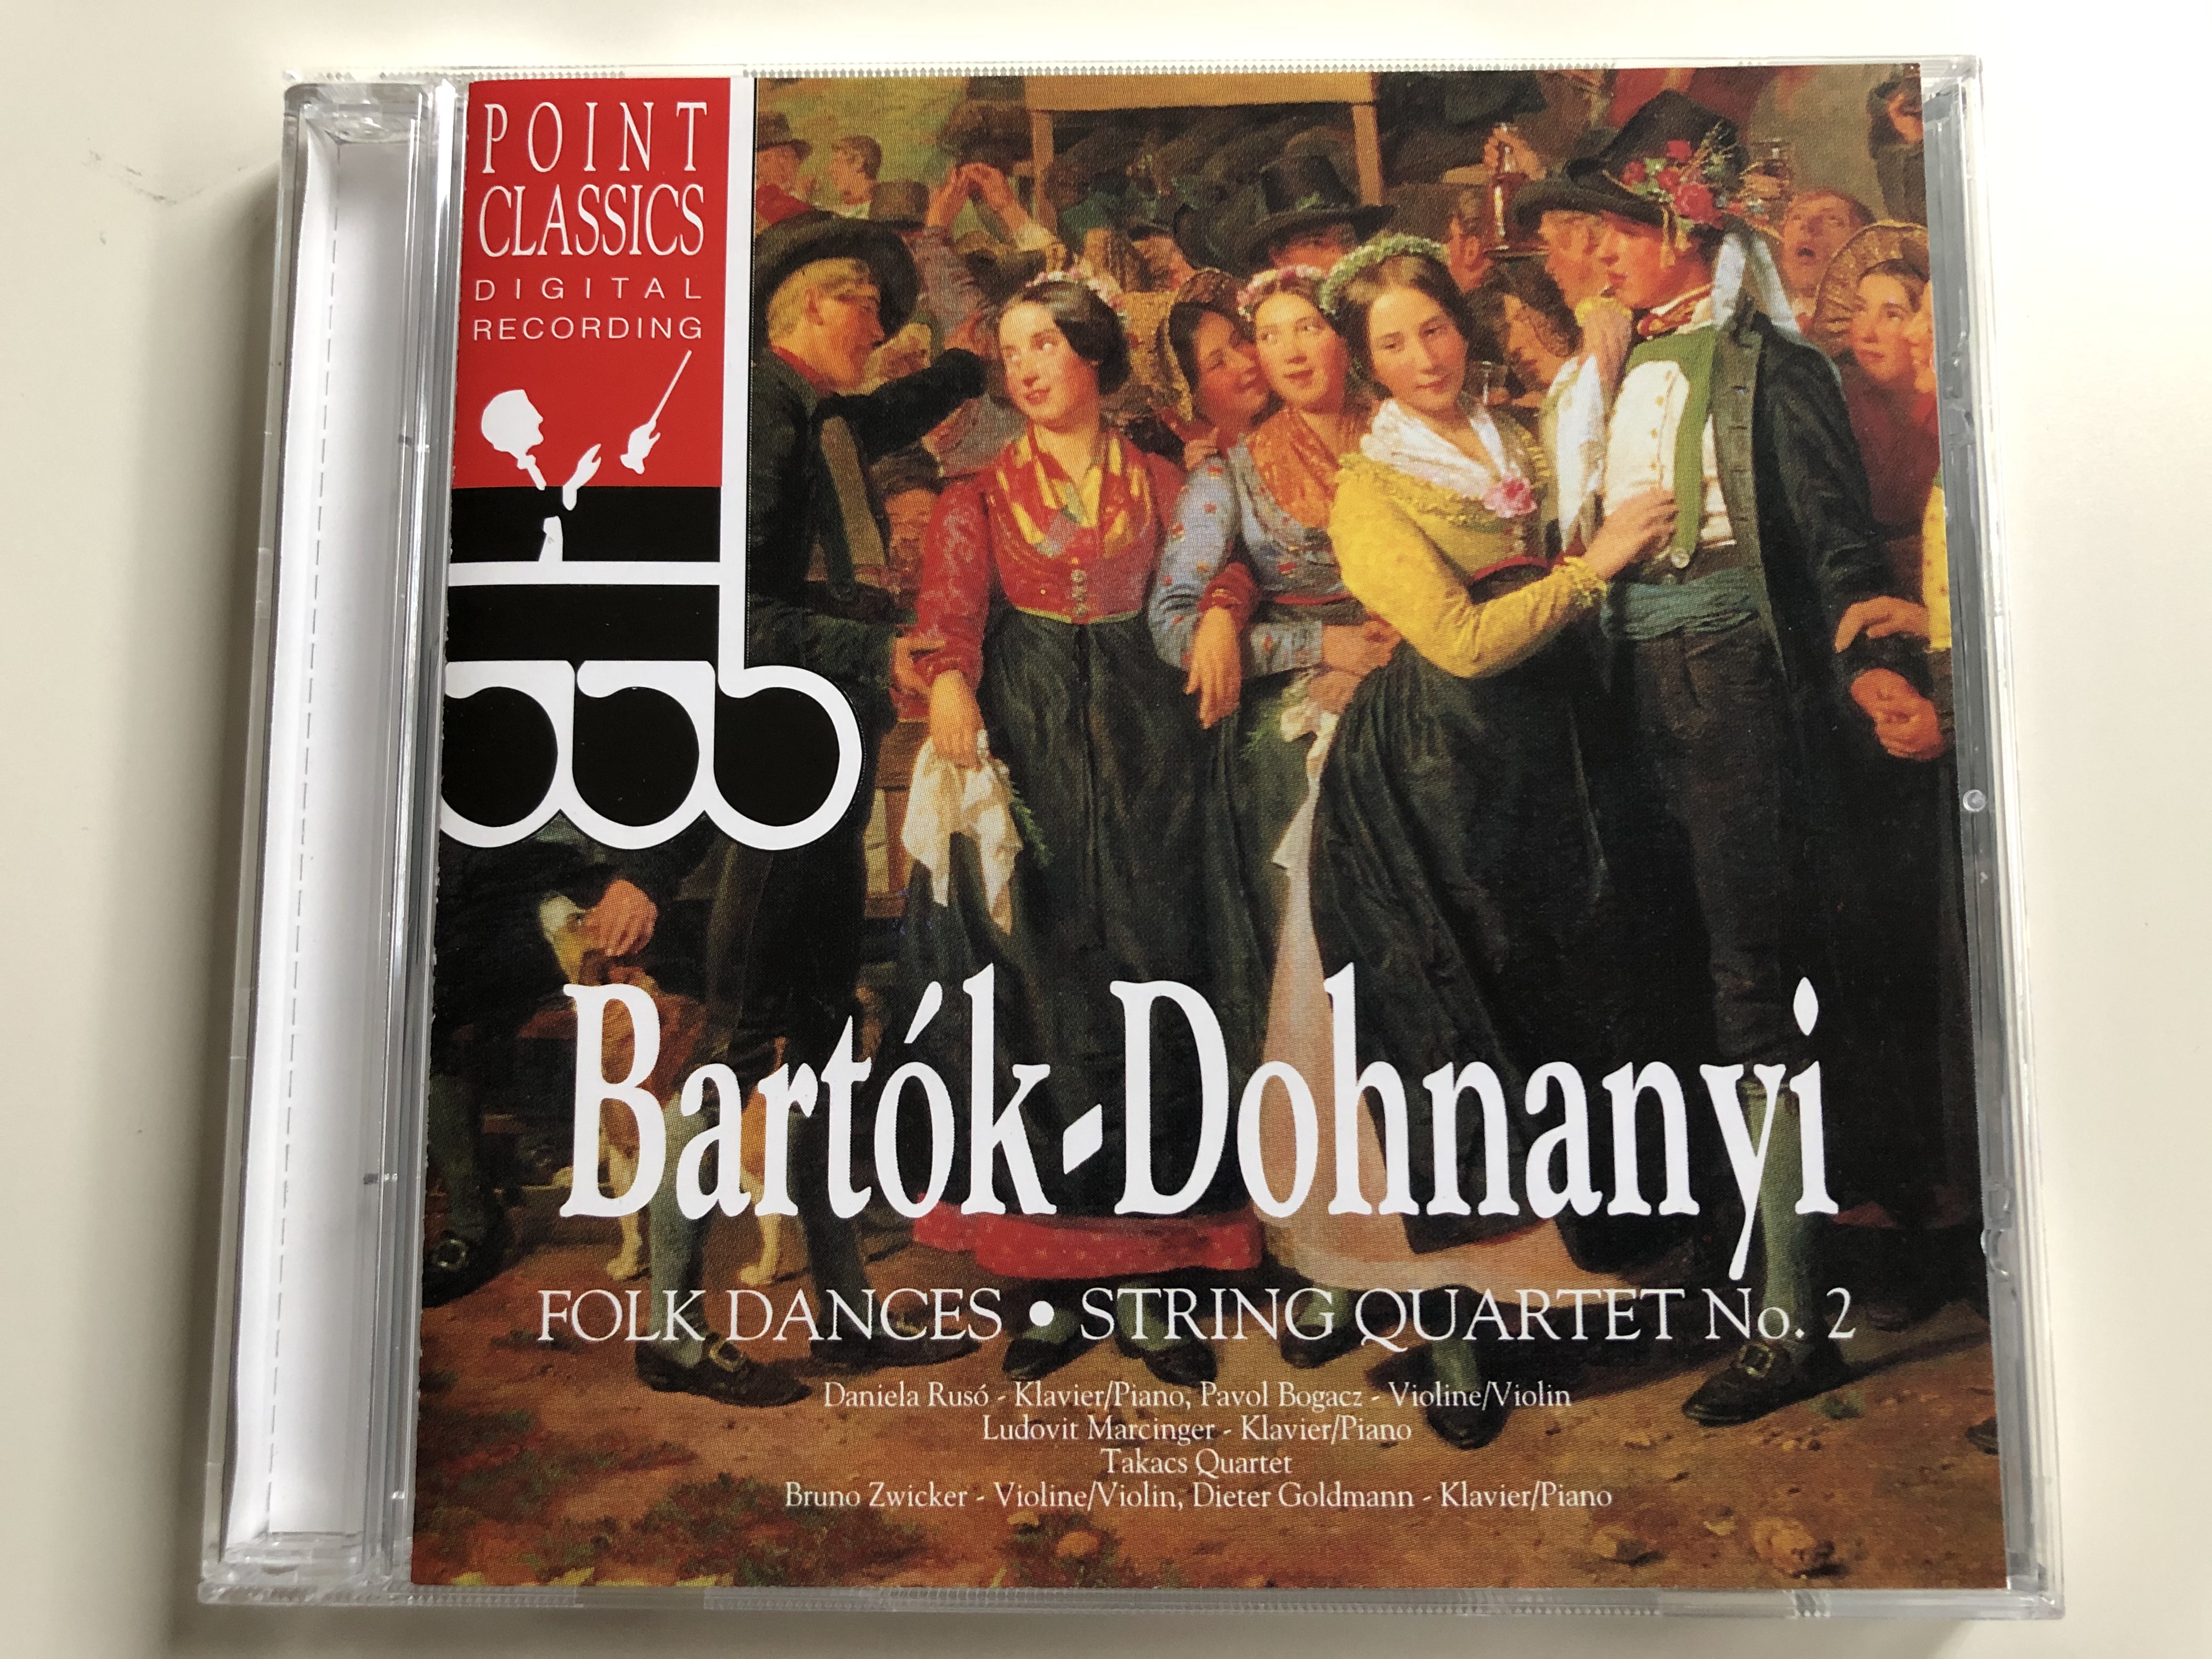 bartok-dohnanyi-folk-dances-string-quartet-no.-2-piano-daniela-ruso-ludovit-marcinger-dieter-goldmann-violin-pavol-bogacz-bruno-zwicker-takacs-quartet-point-classics-audio-cd-1996-267232-1-.jpg